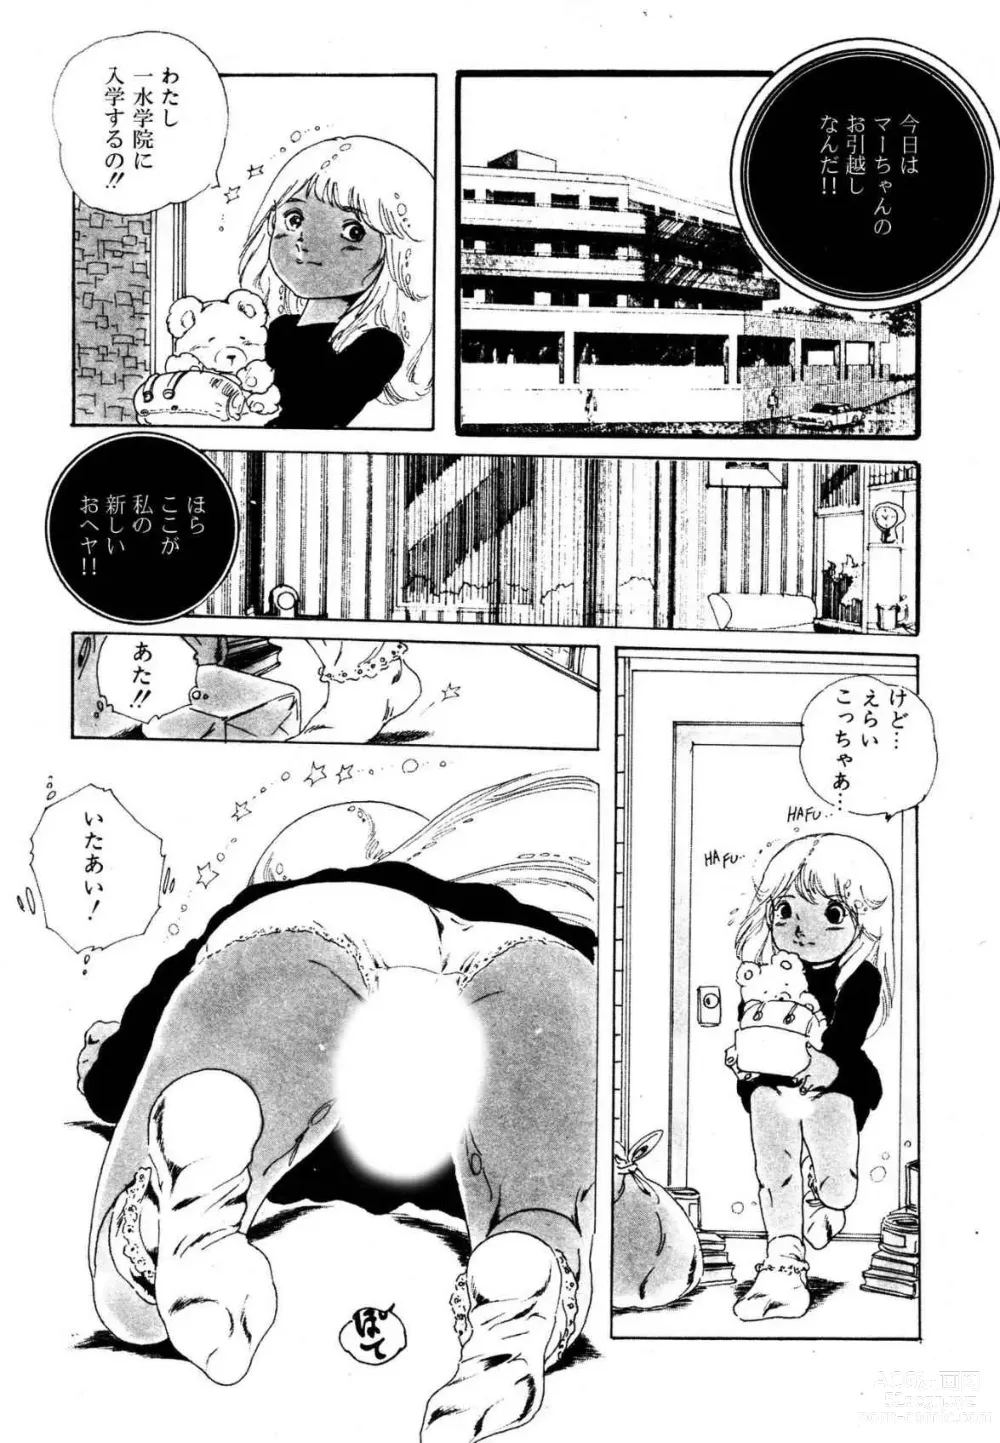 Page 6 of manga Dreaming fairy